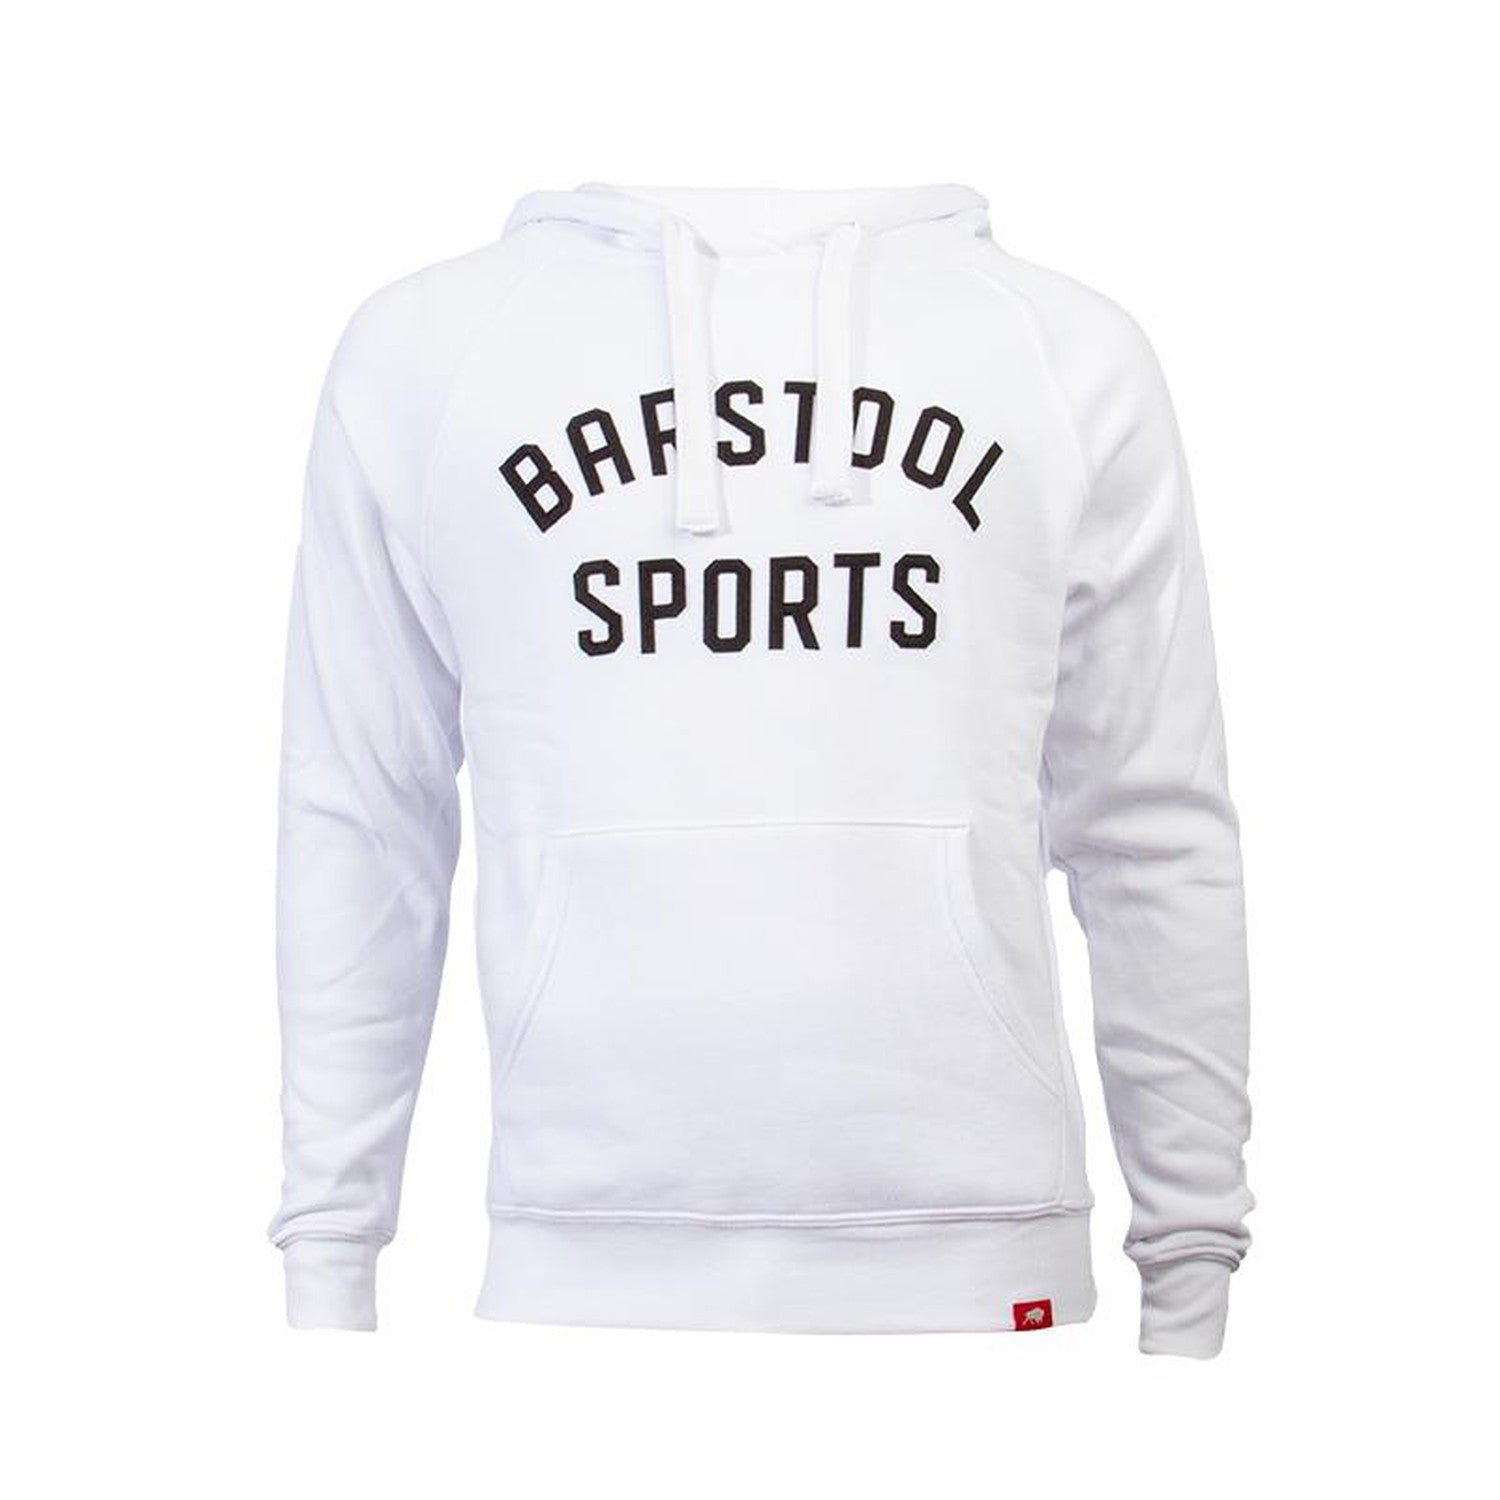 Barstool Sportiqe Applique Olsen Hoodie-Hoodies-Barstool Sports-White-S-Barstool Sports